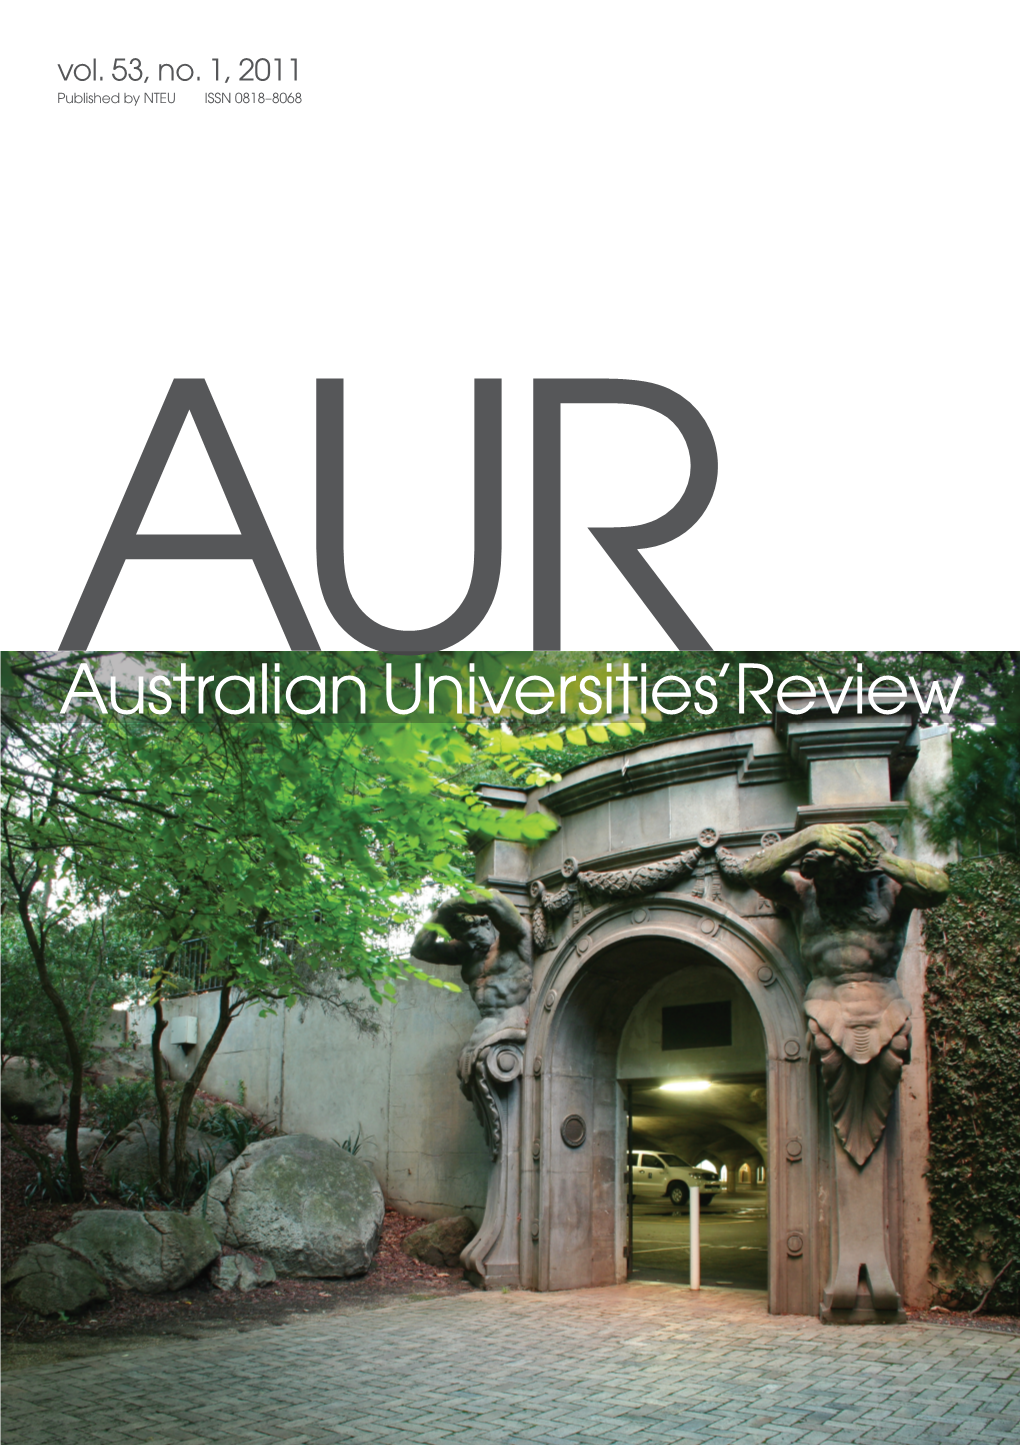 Australian Universities' Review